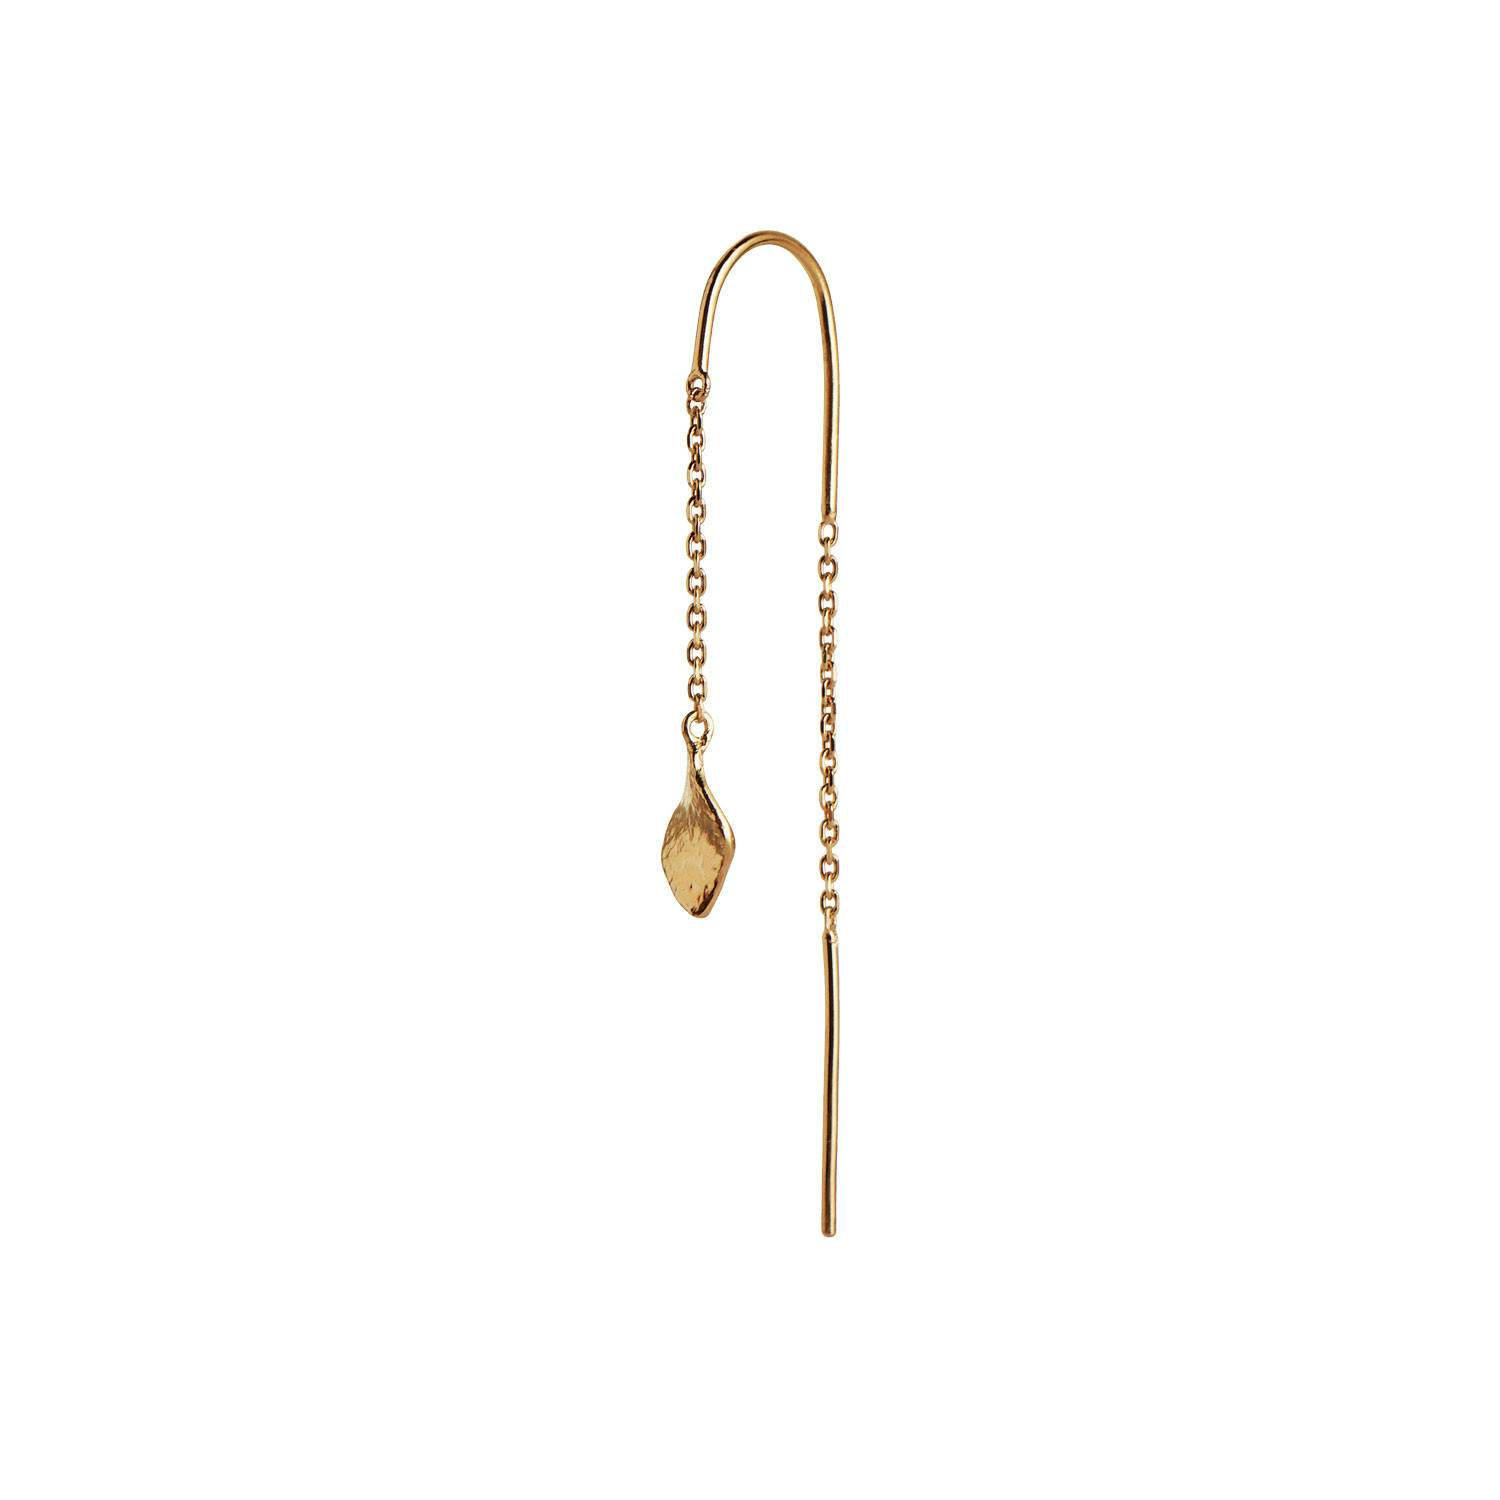 Petit Ile De L'Amour Double Chain Earring von STINE A Jewelry in Vergoldet-Silber Sterling 925